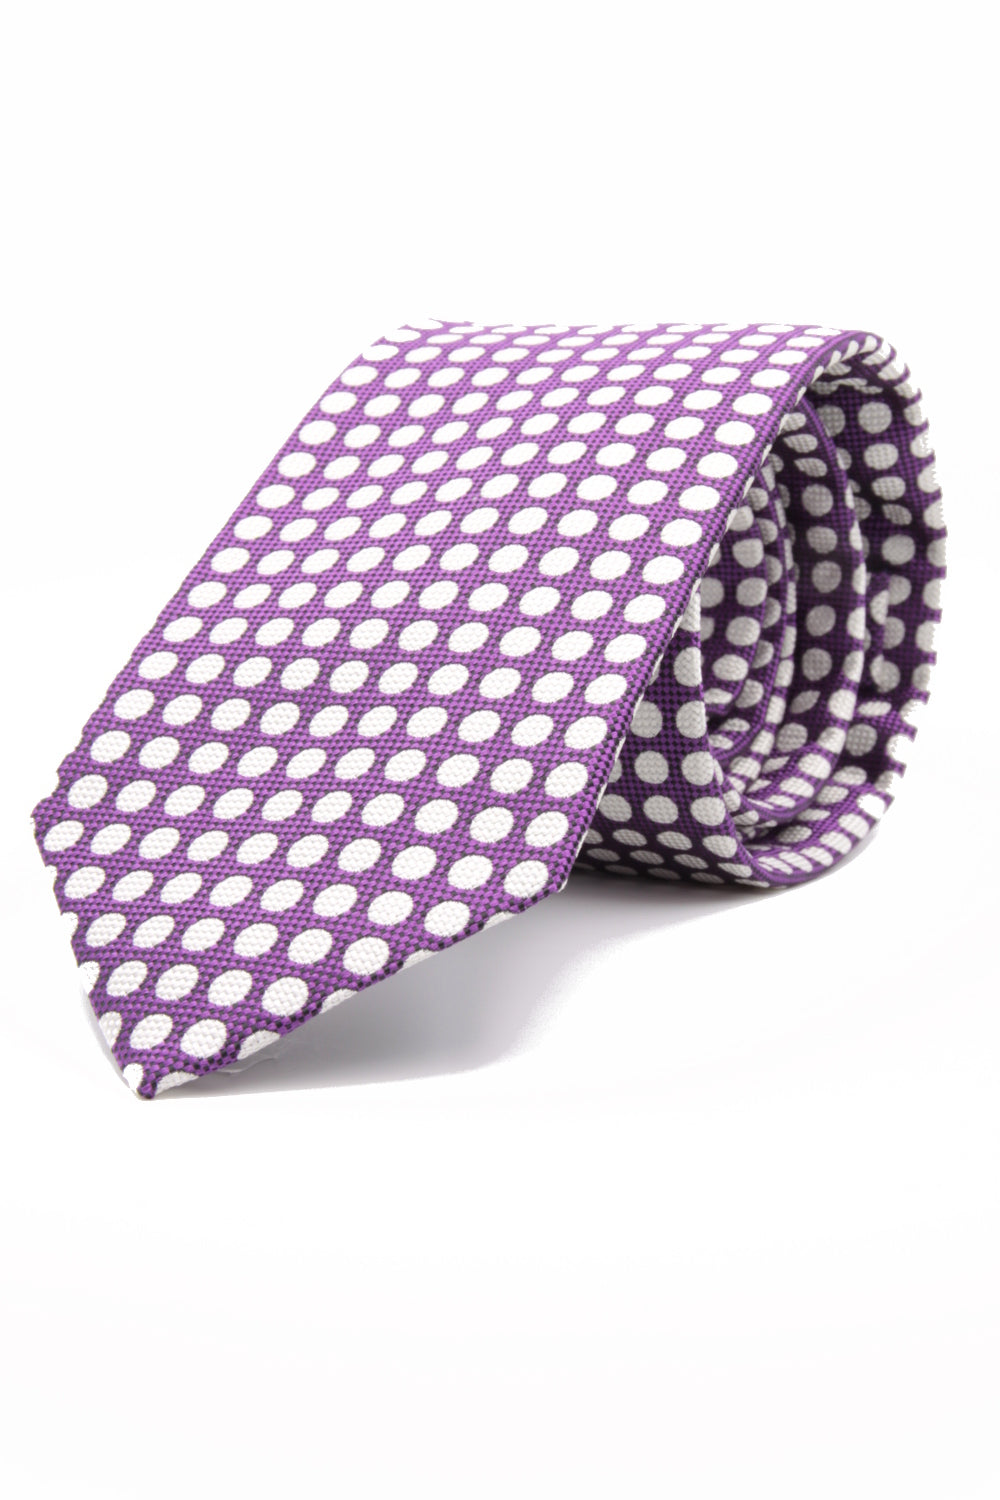 drake's Churchill's spot purple and white tie